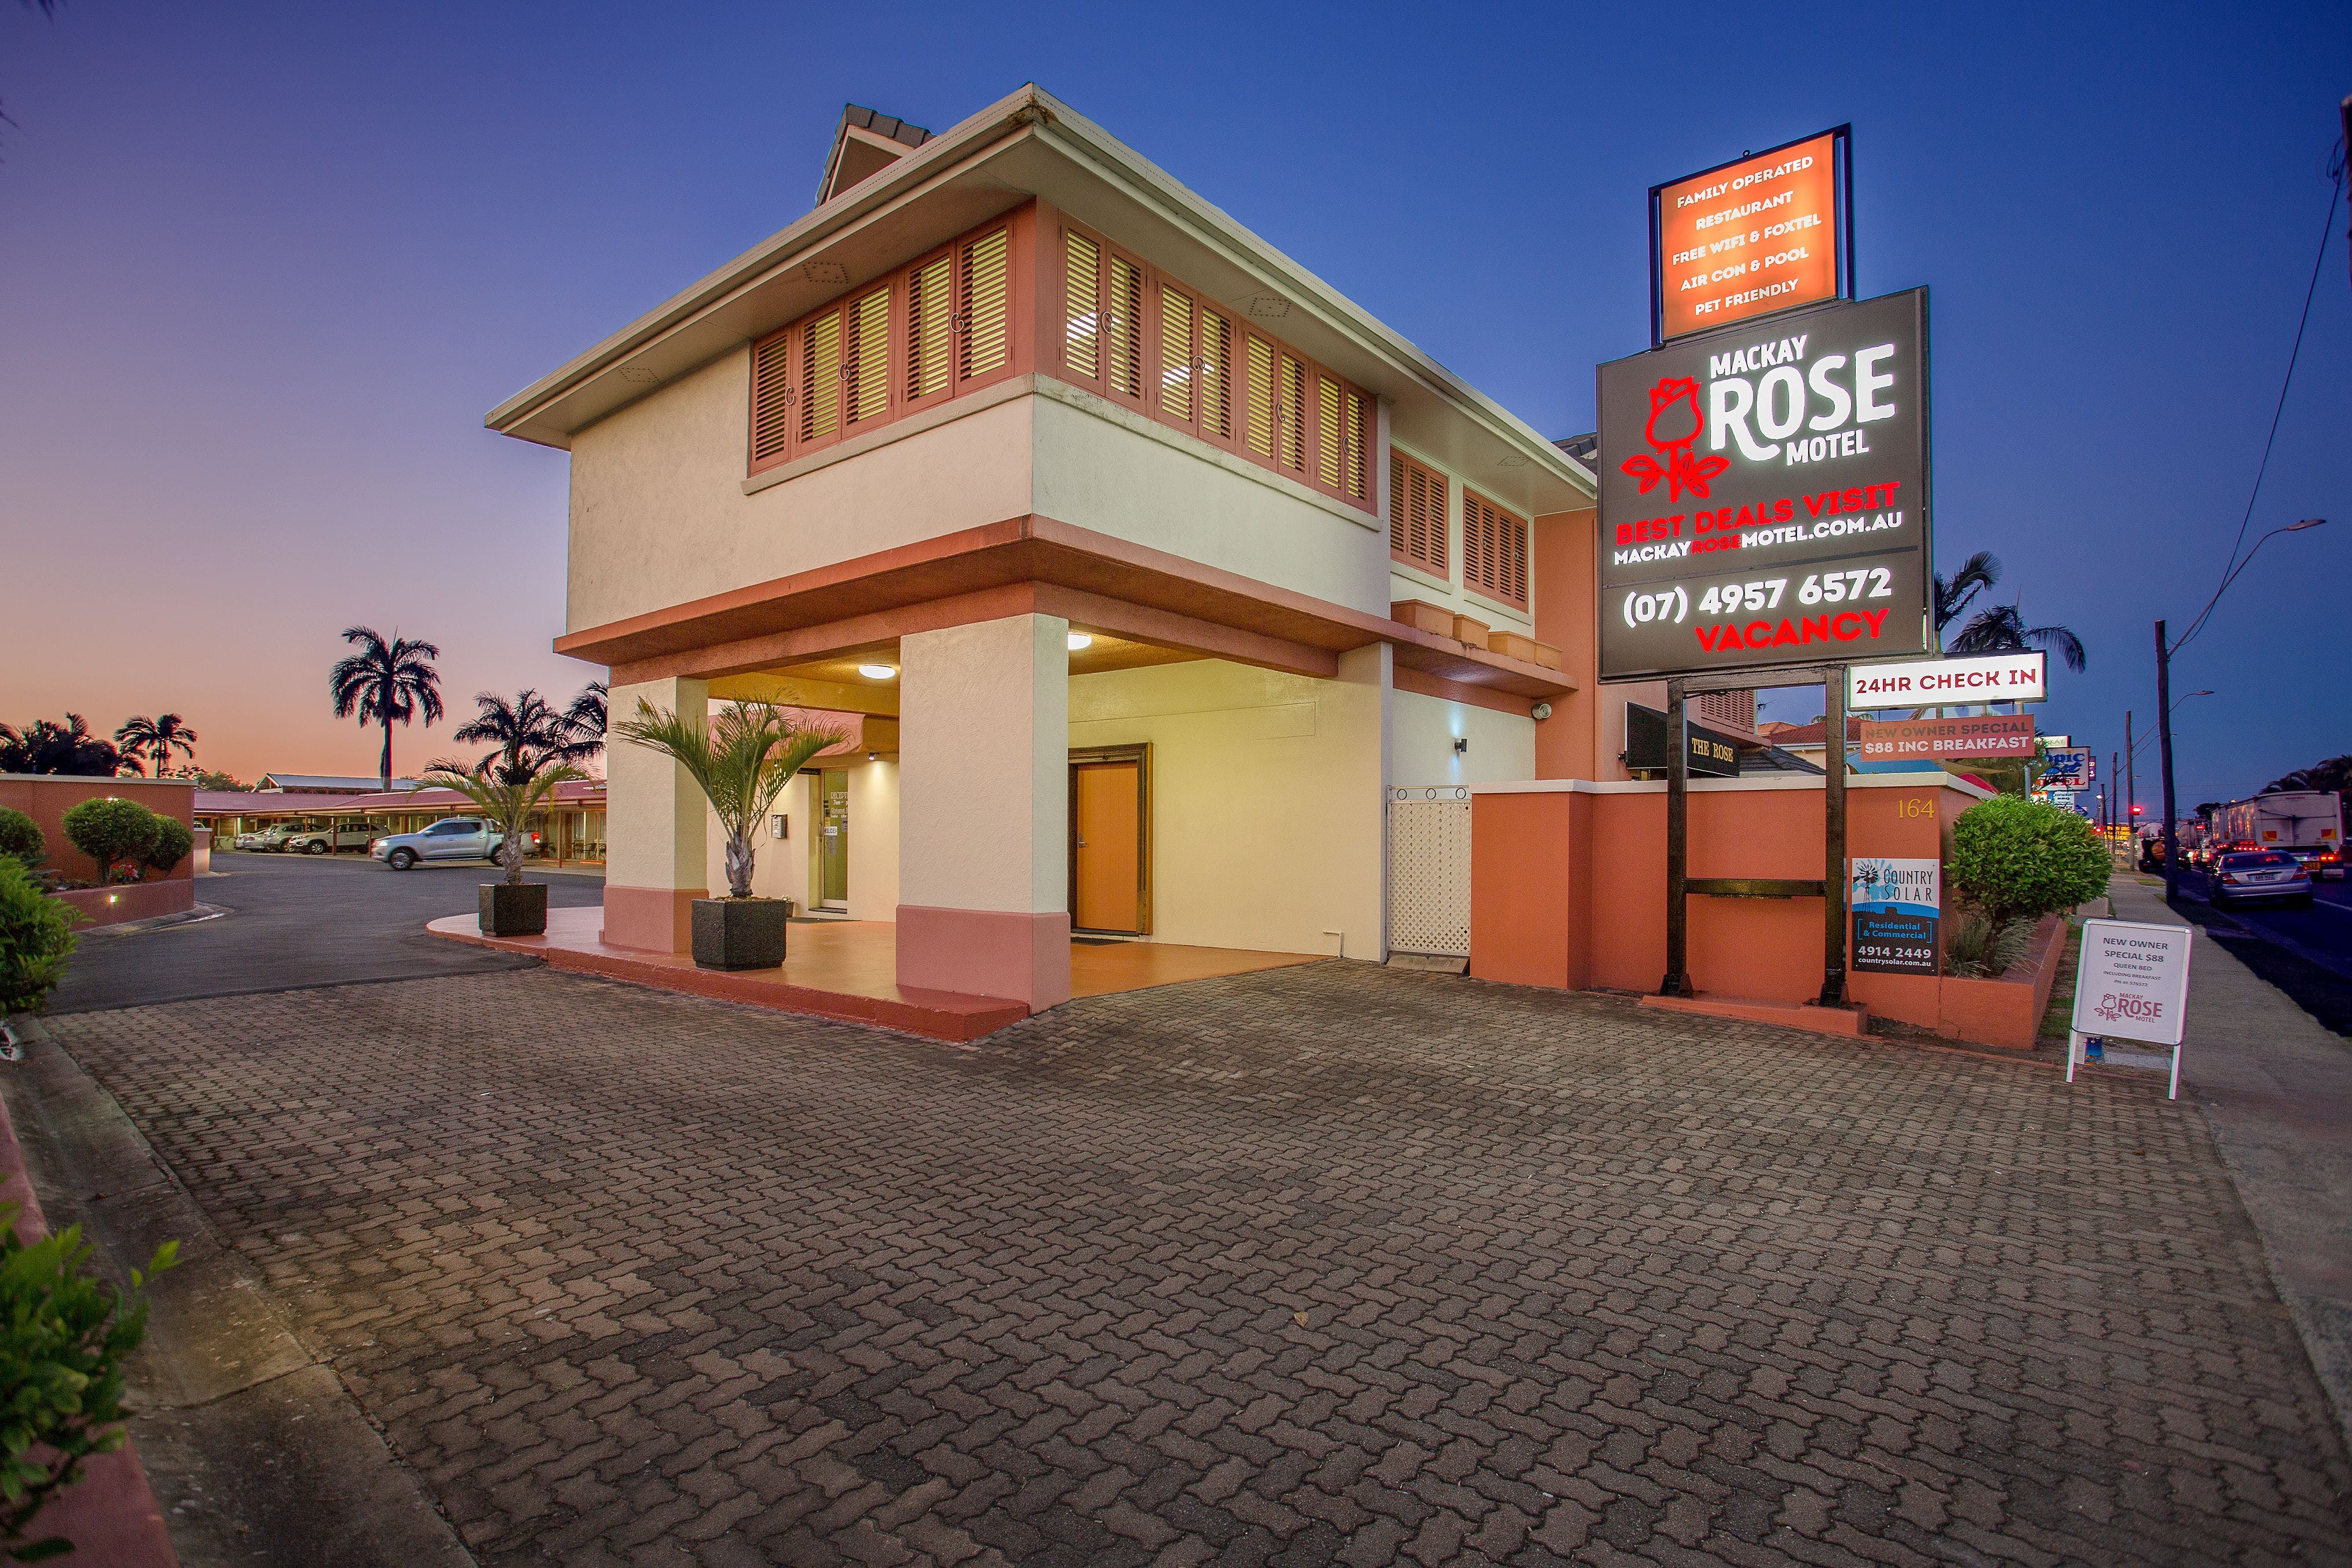 Mackay Rose Motel - Accommodation Bookings 0